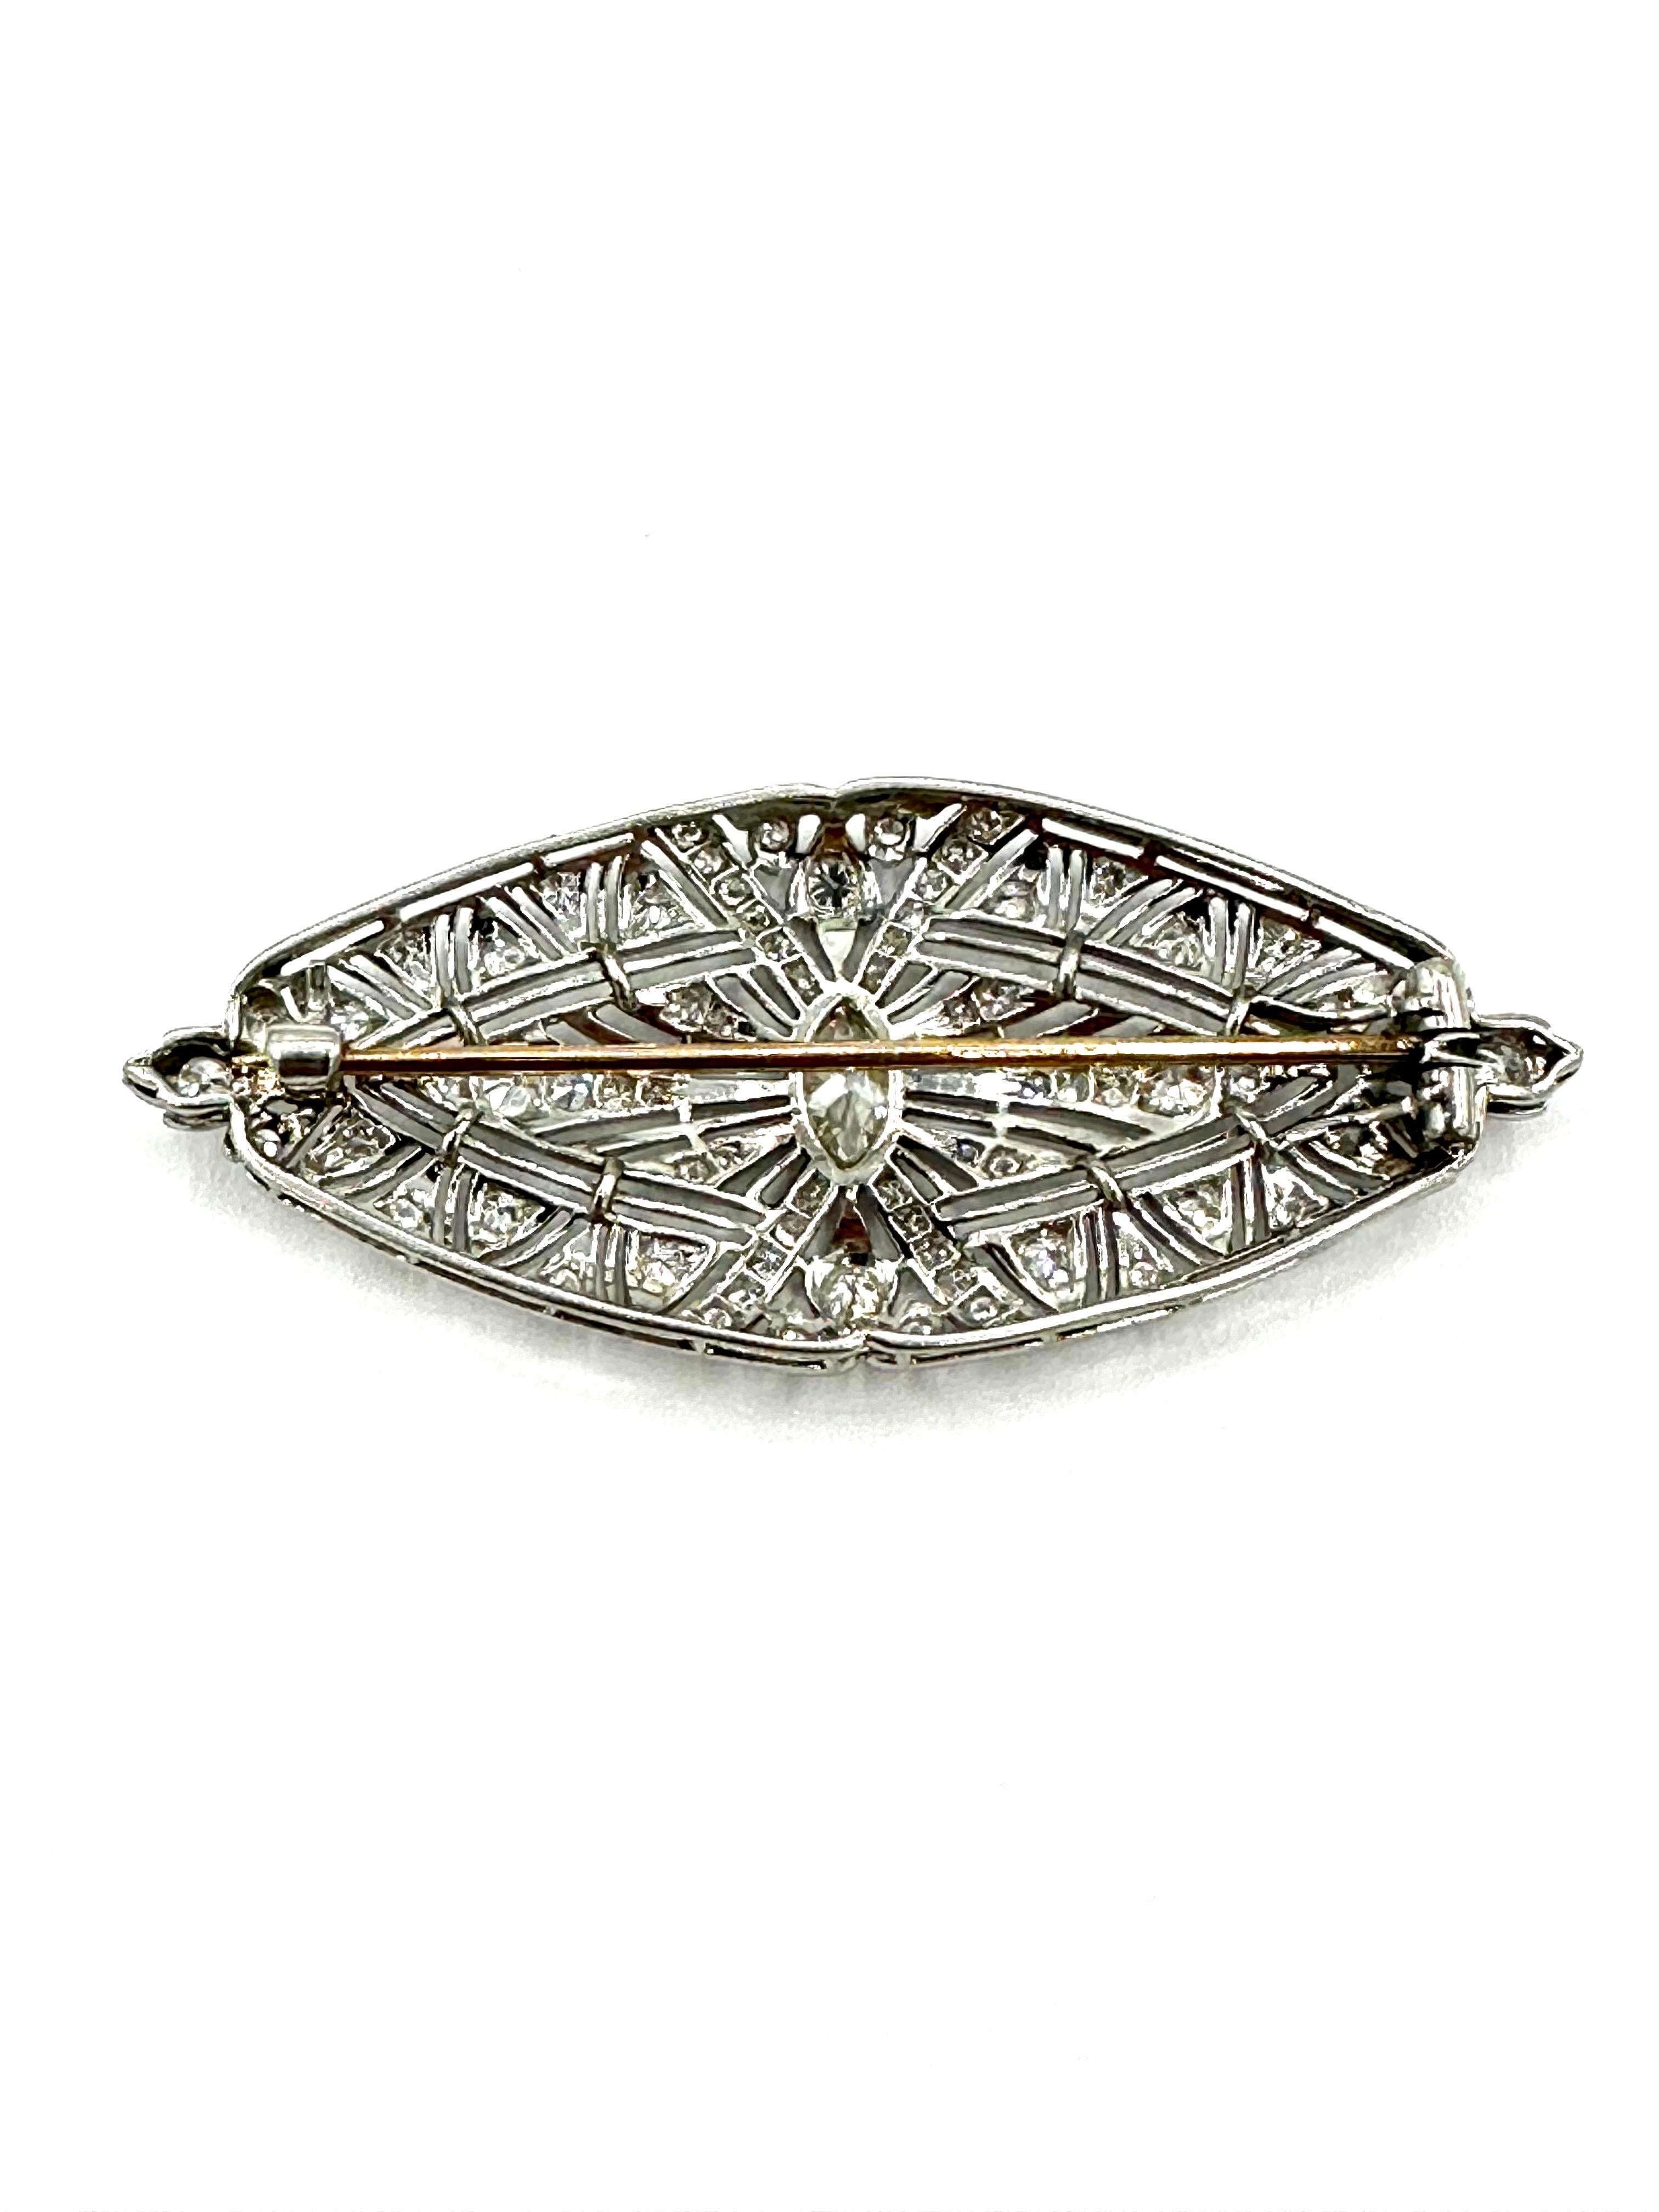 Women's or Men's Art Deco 1.59 Carat Diamond Platinum Brooch For Sale